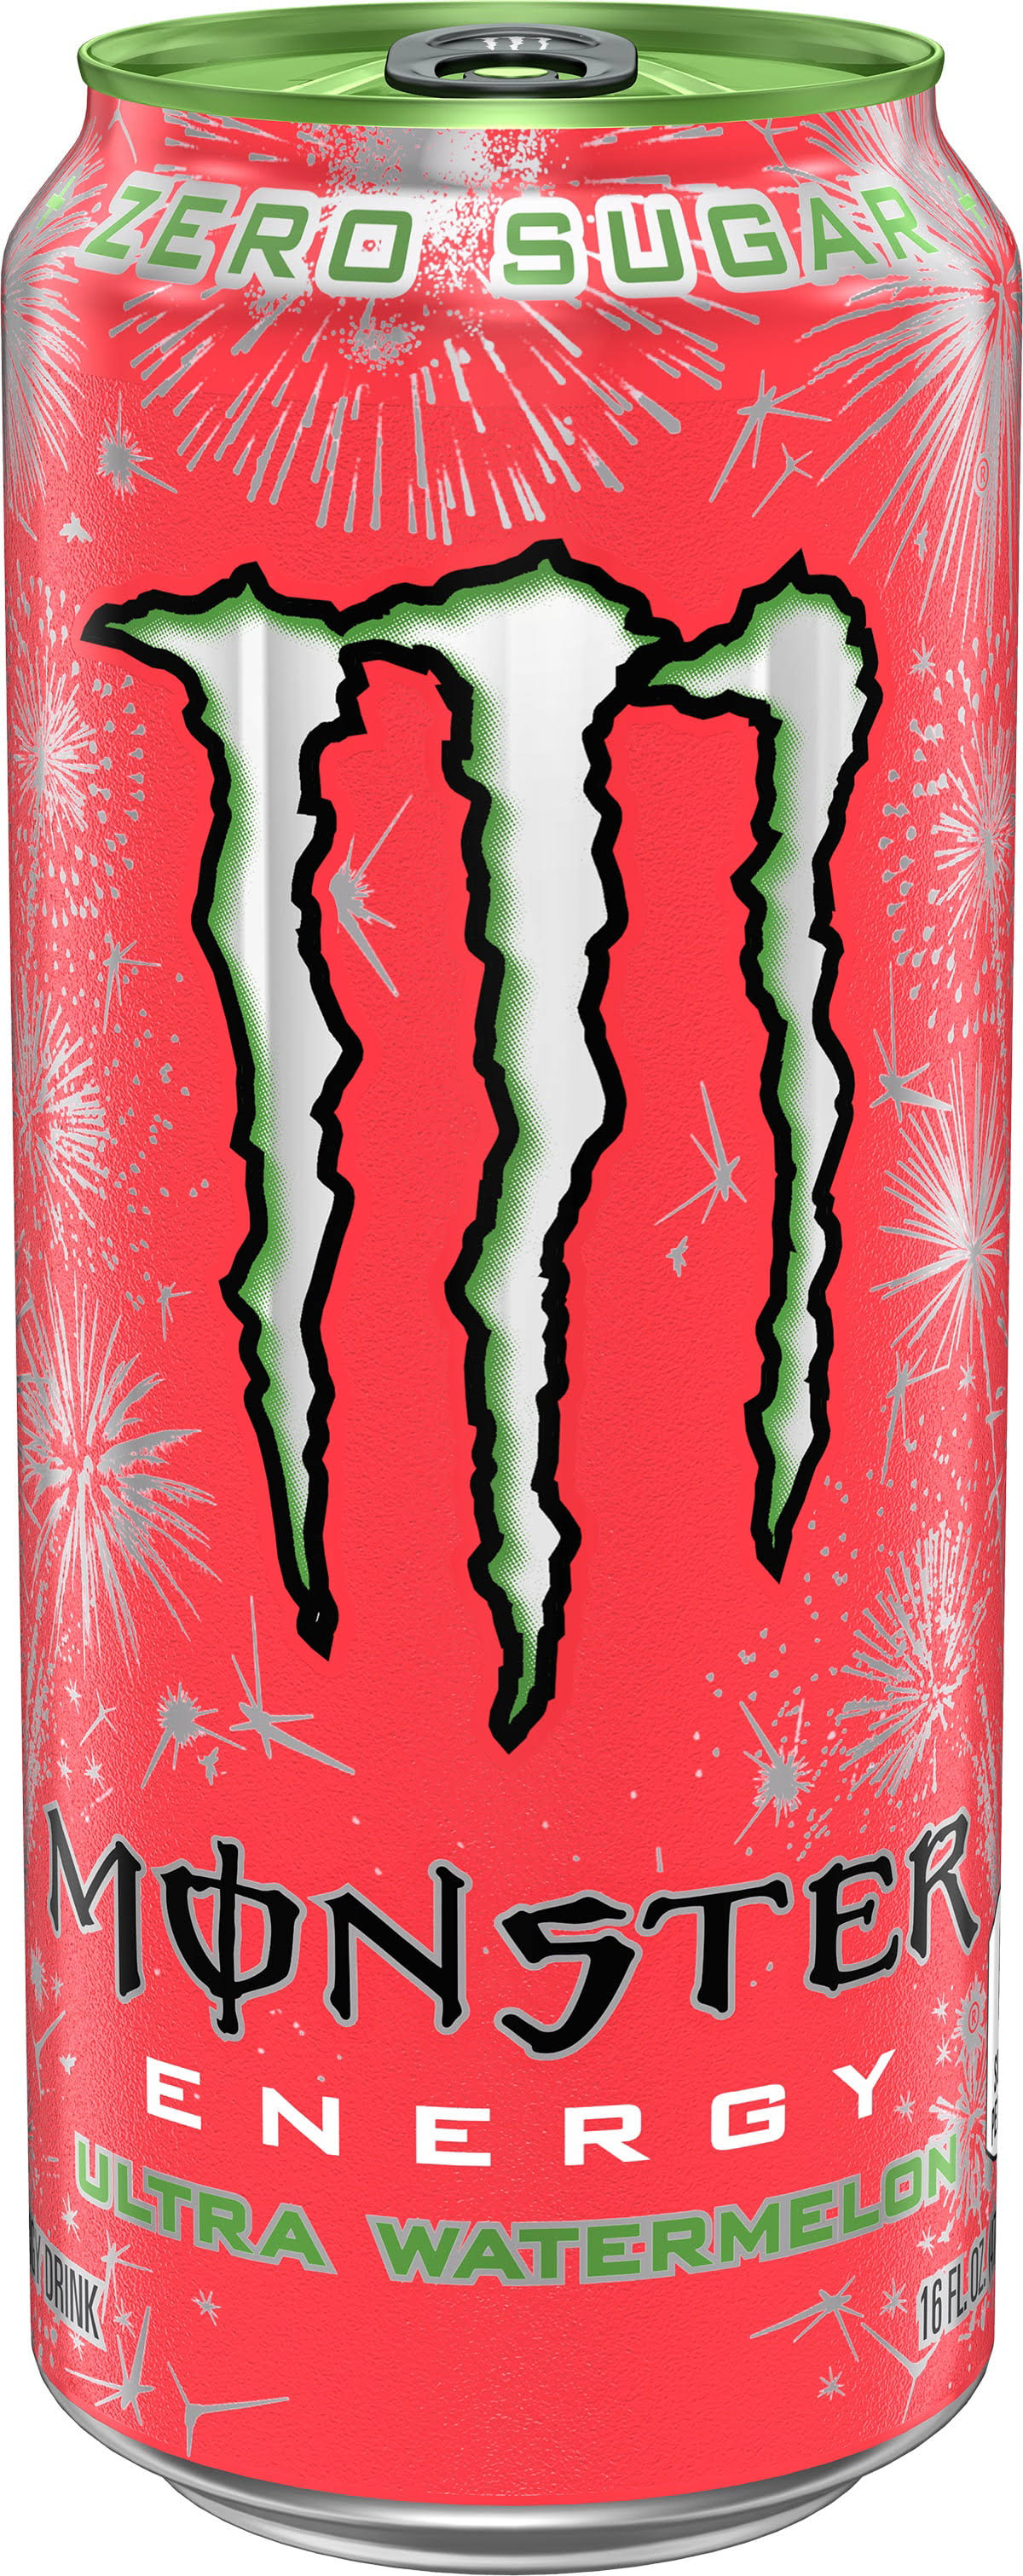 'Monster Energy - Ultra Watermelon - 16 ounce